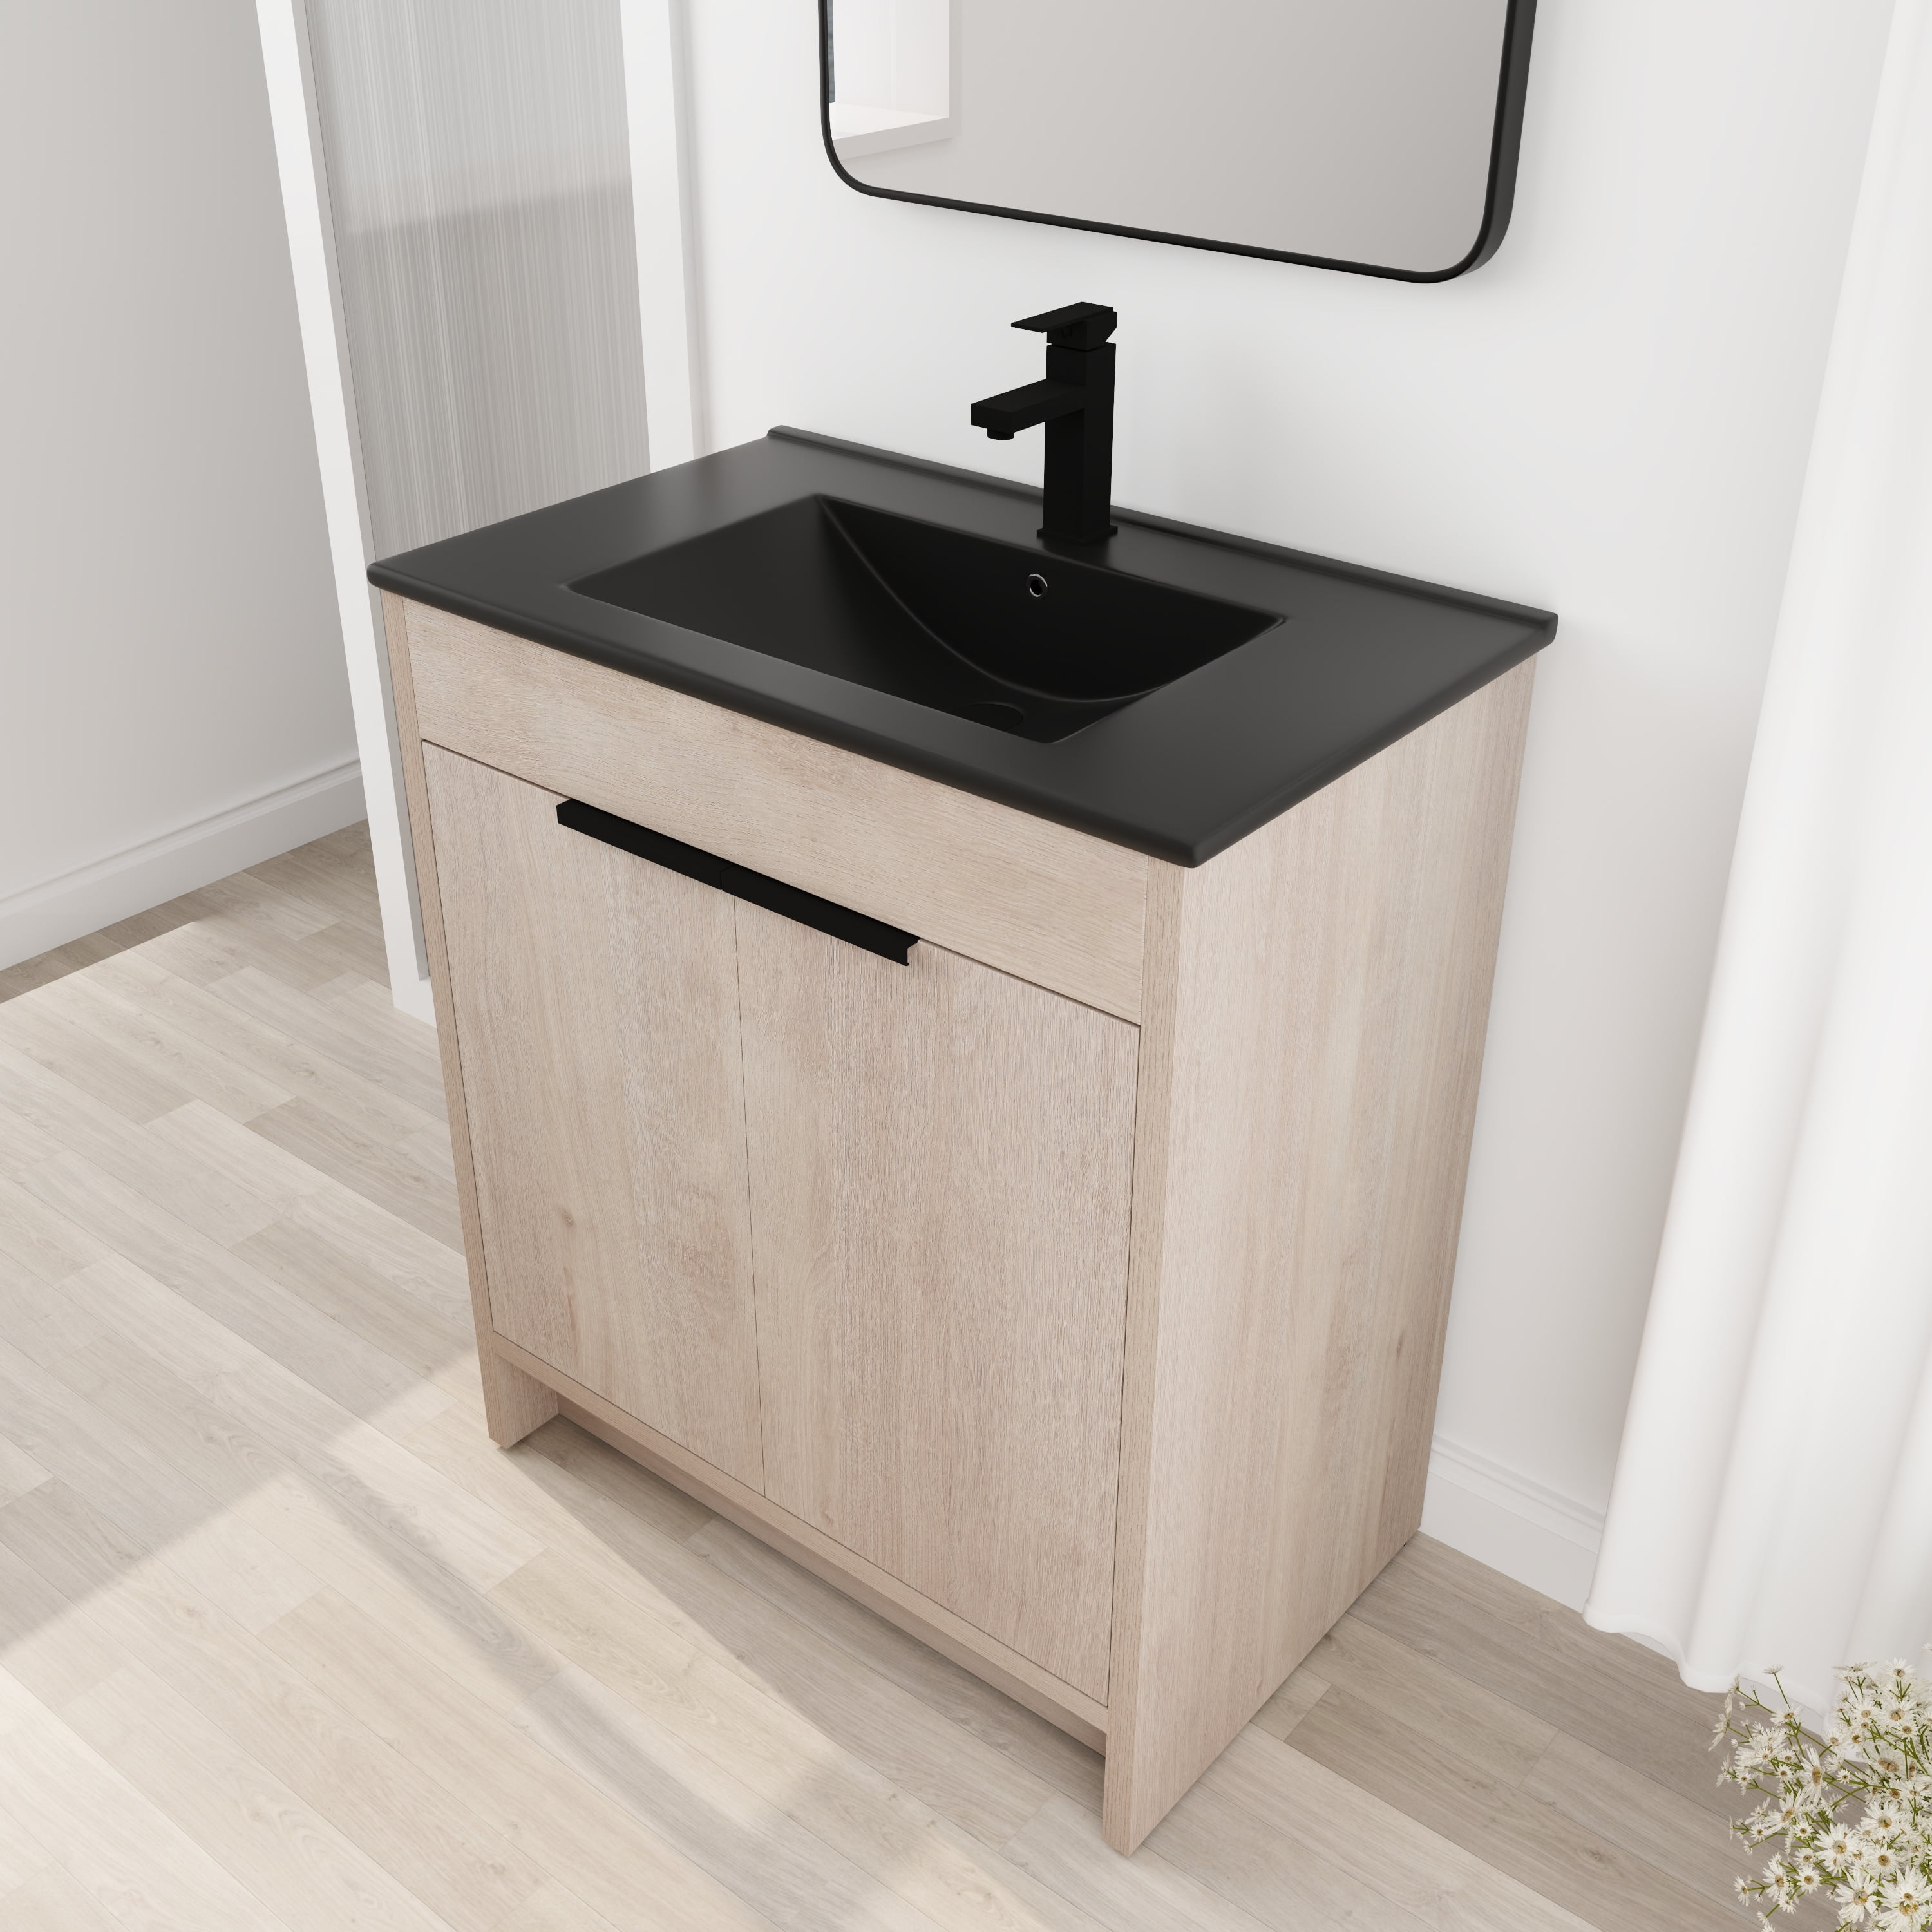  Sybrioka Bathroom Vanity with Ceramic Sink, 30